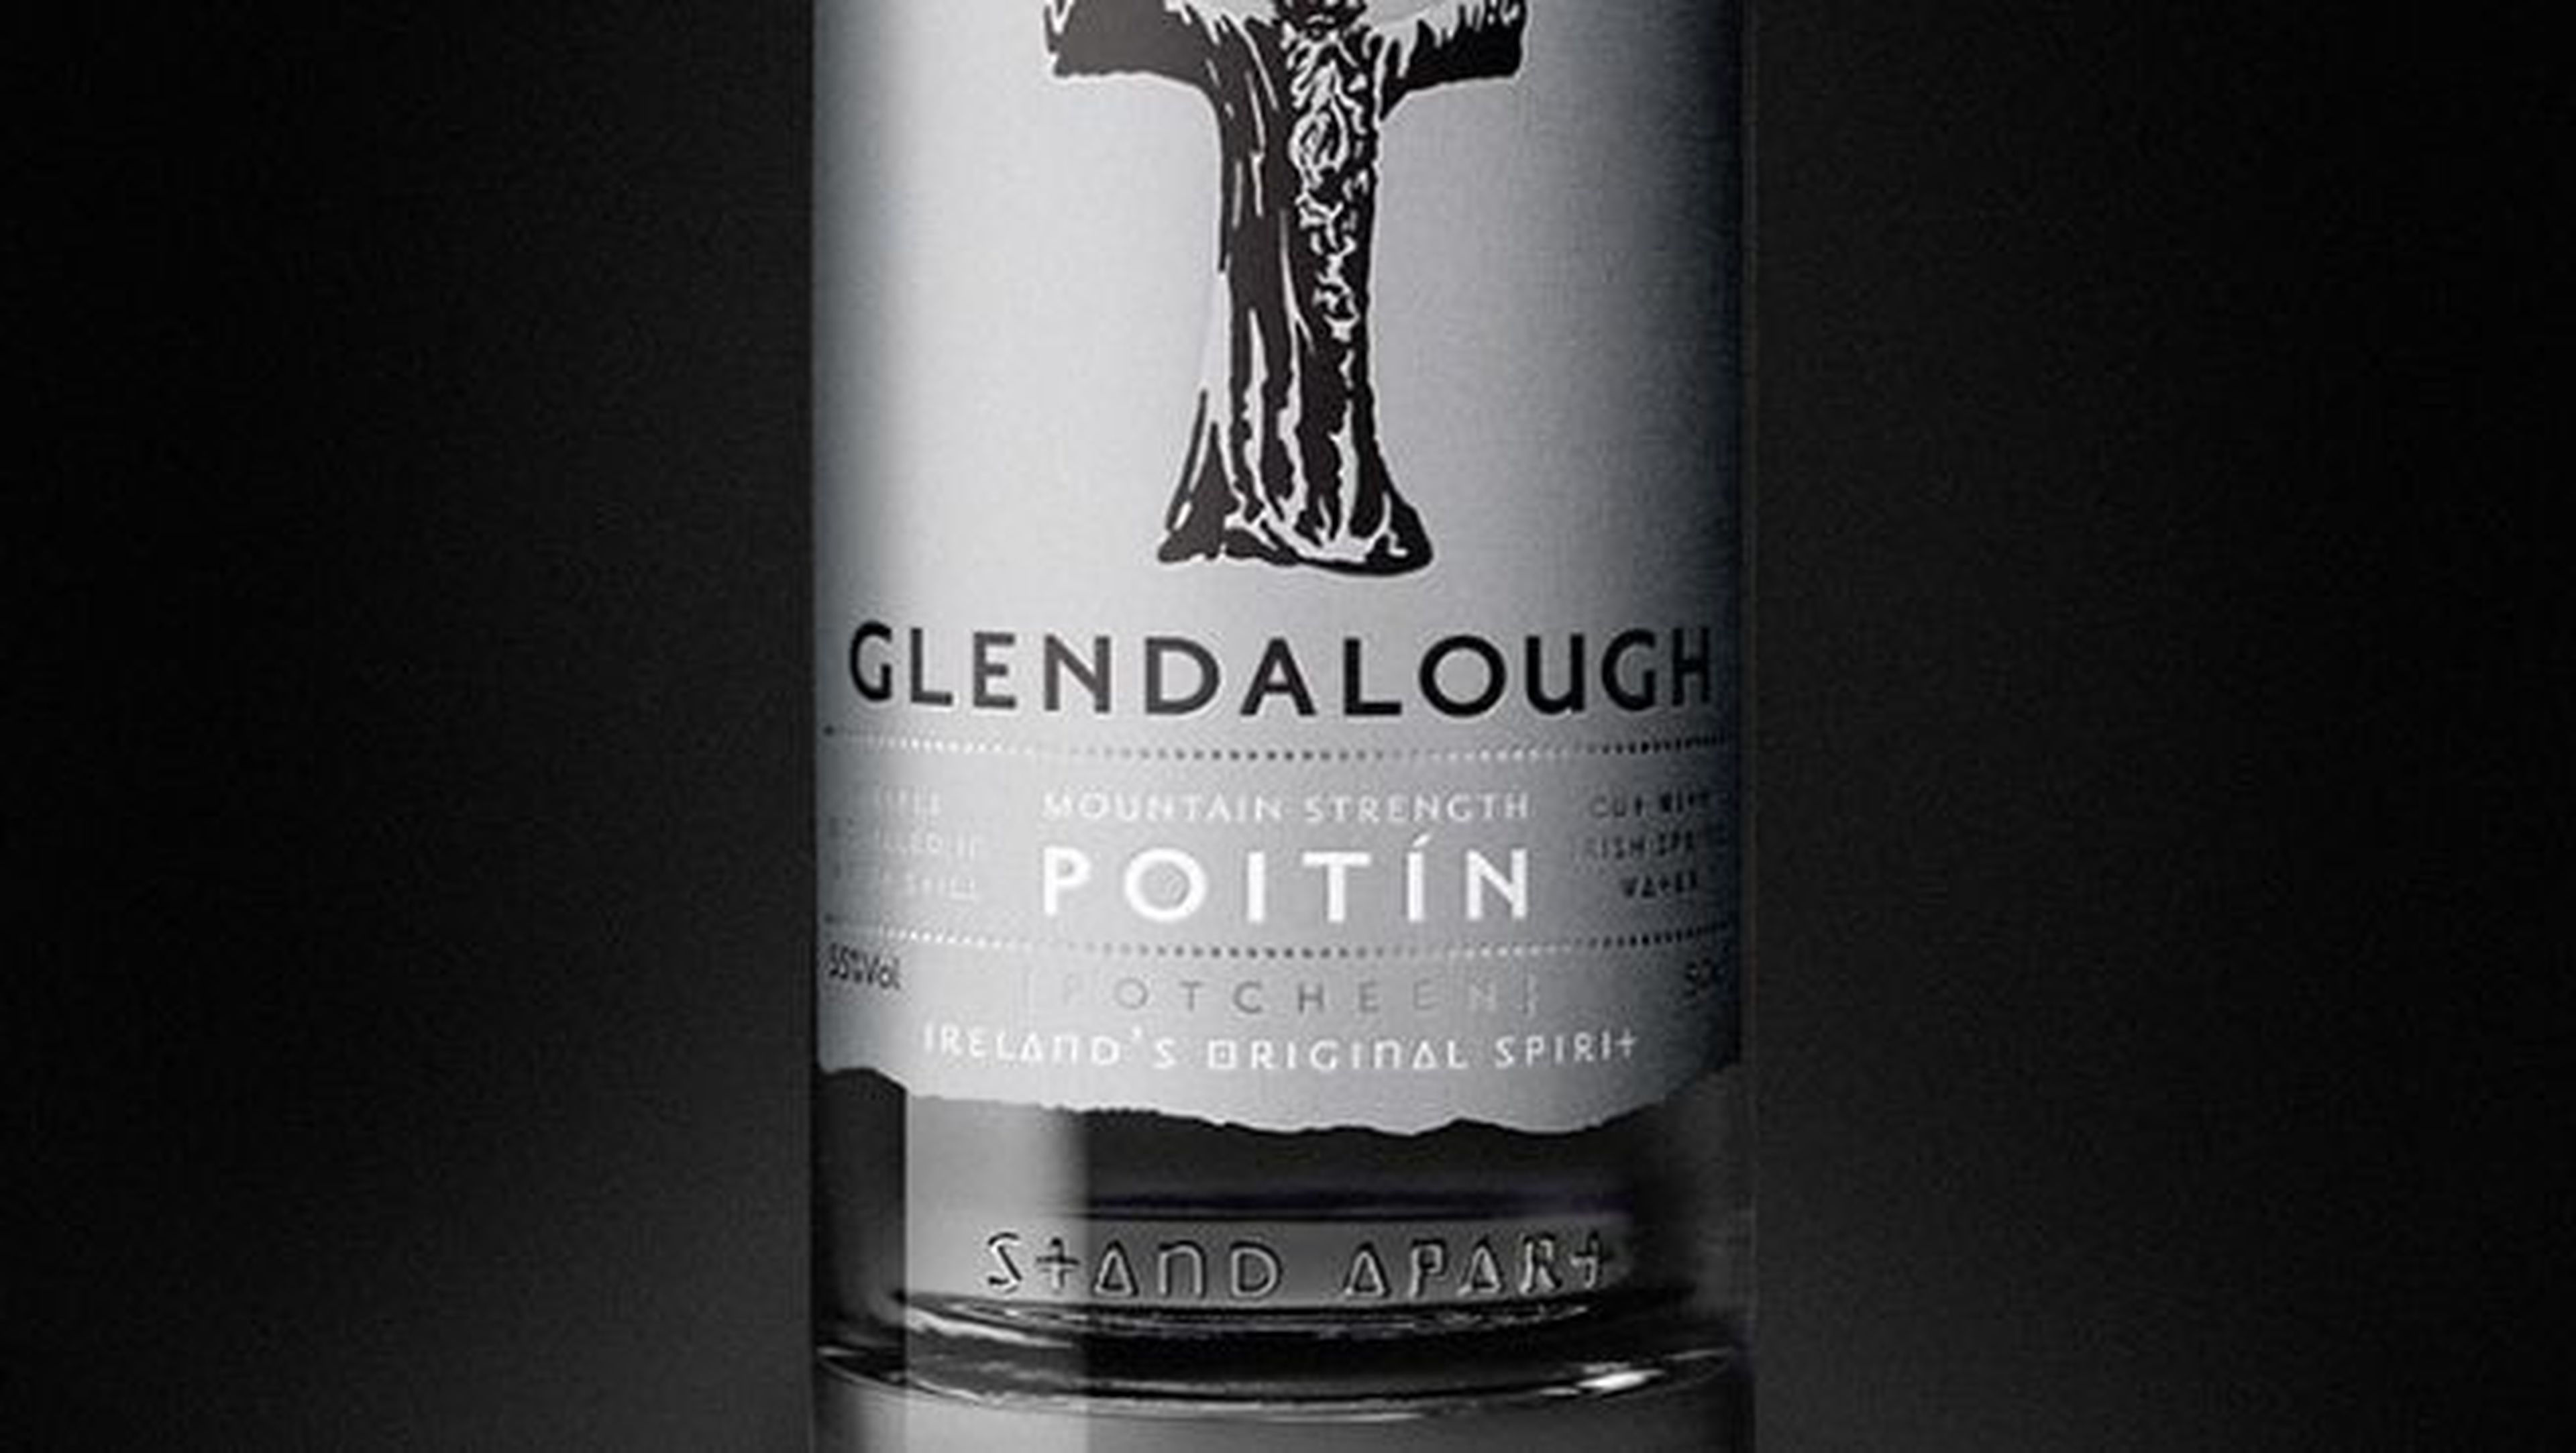 Poitín (Glendalough Distillery)